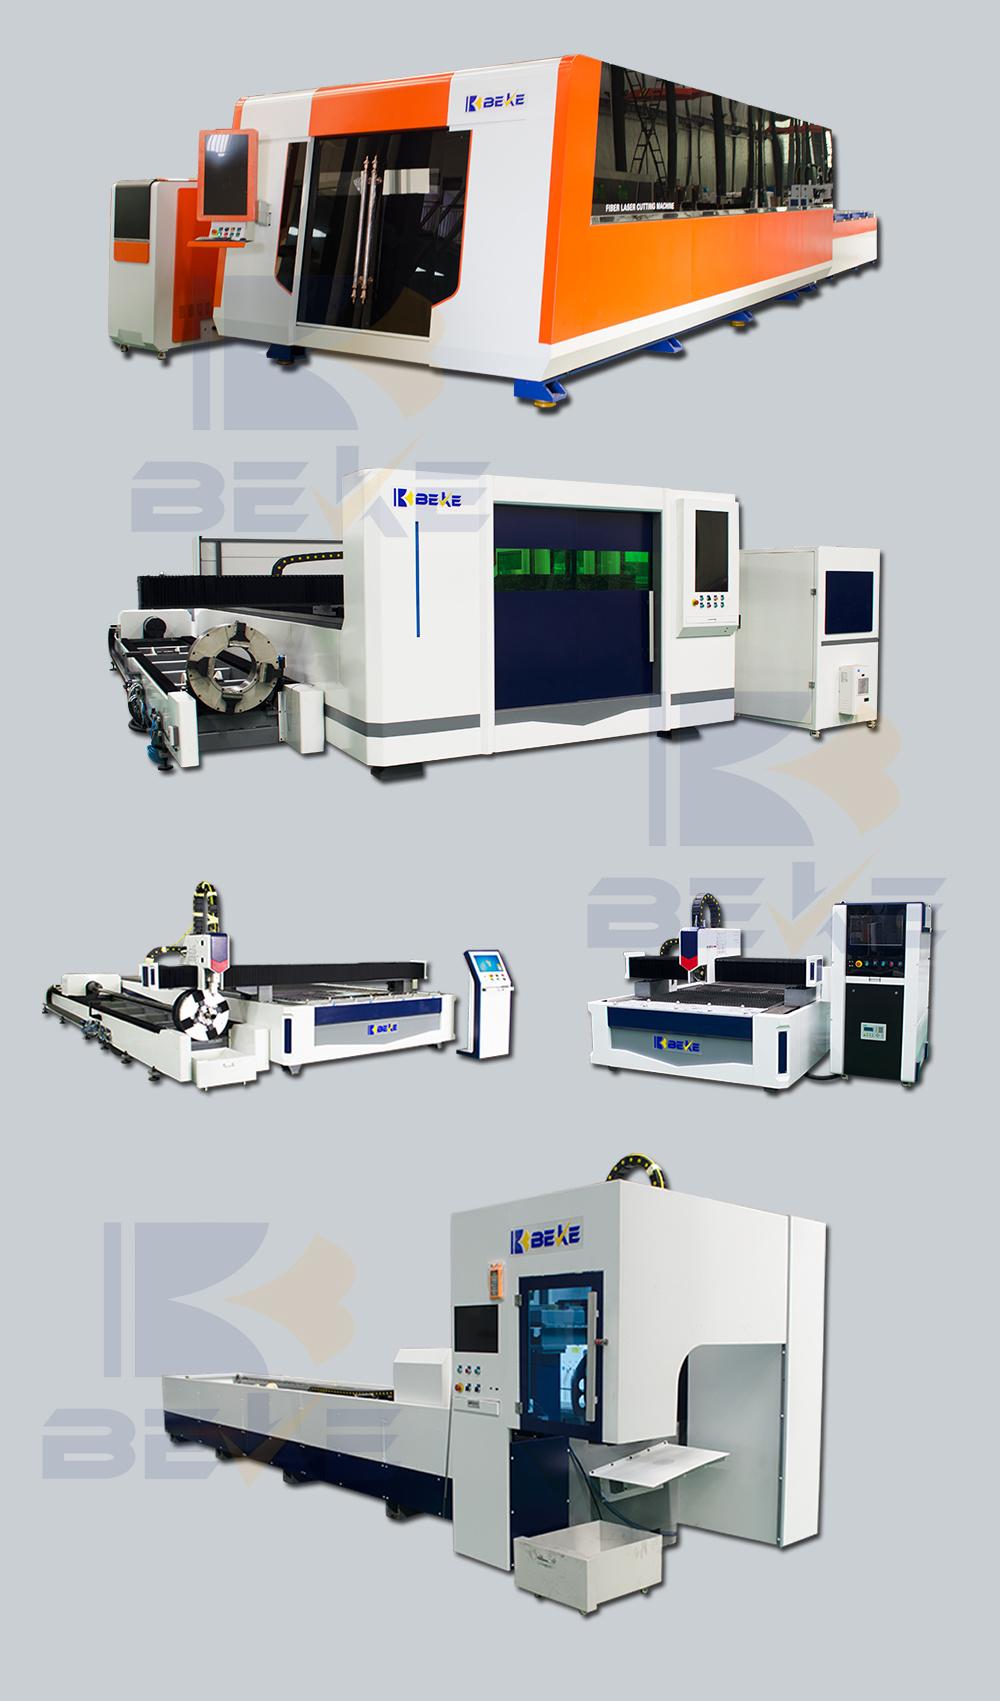 Beke Brand High Performance 4015 1500W Ss Sheet Pipe and Plate CNC Fiber Laser Cutting Machine